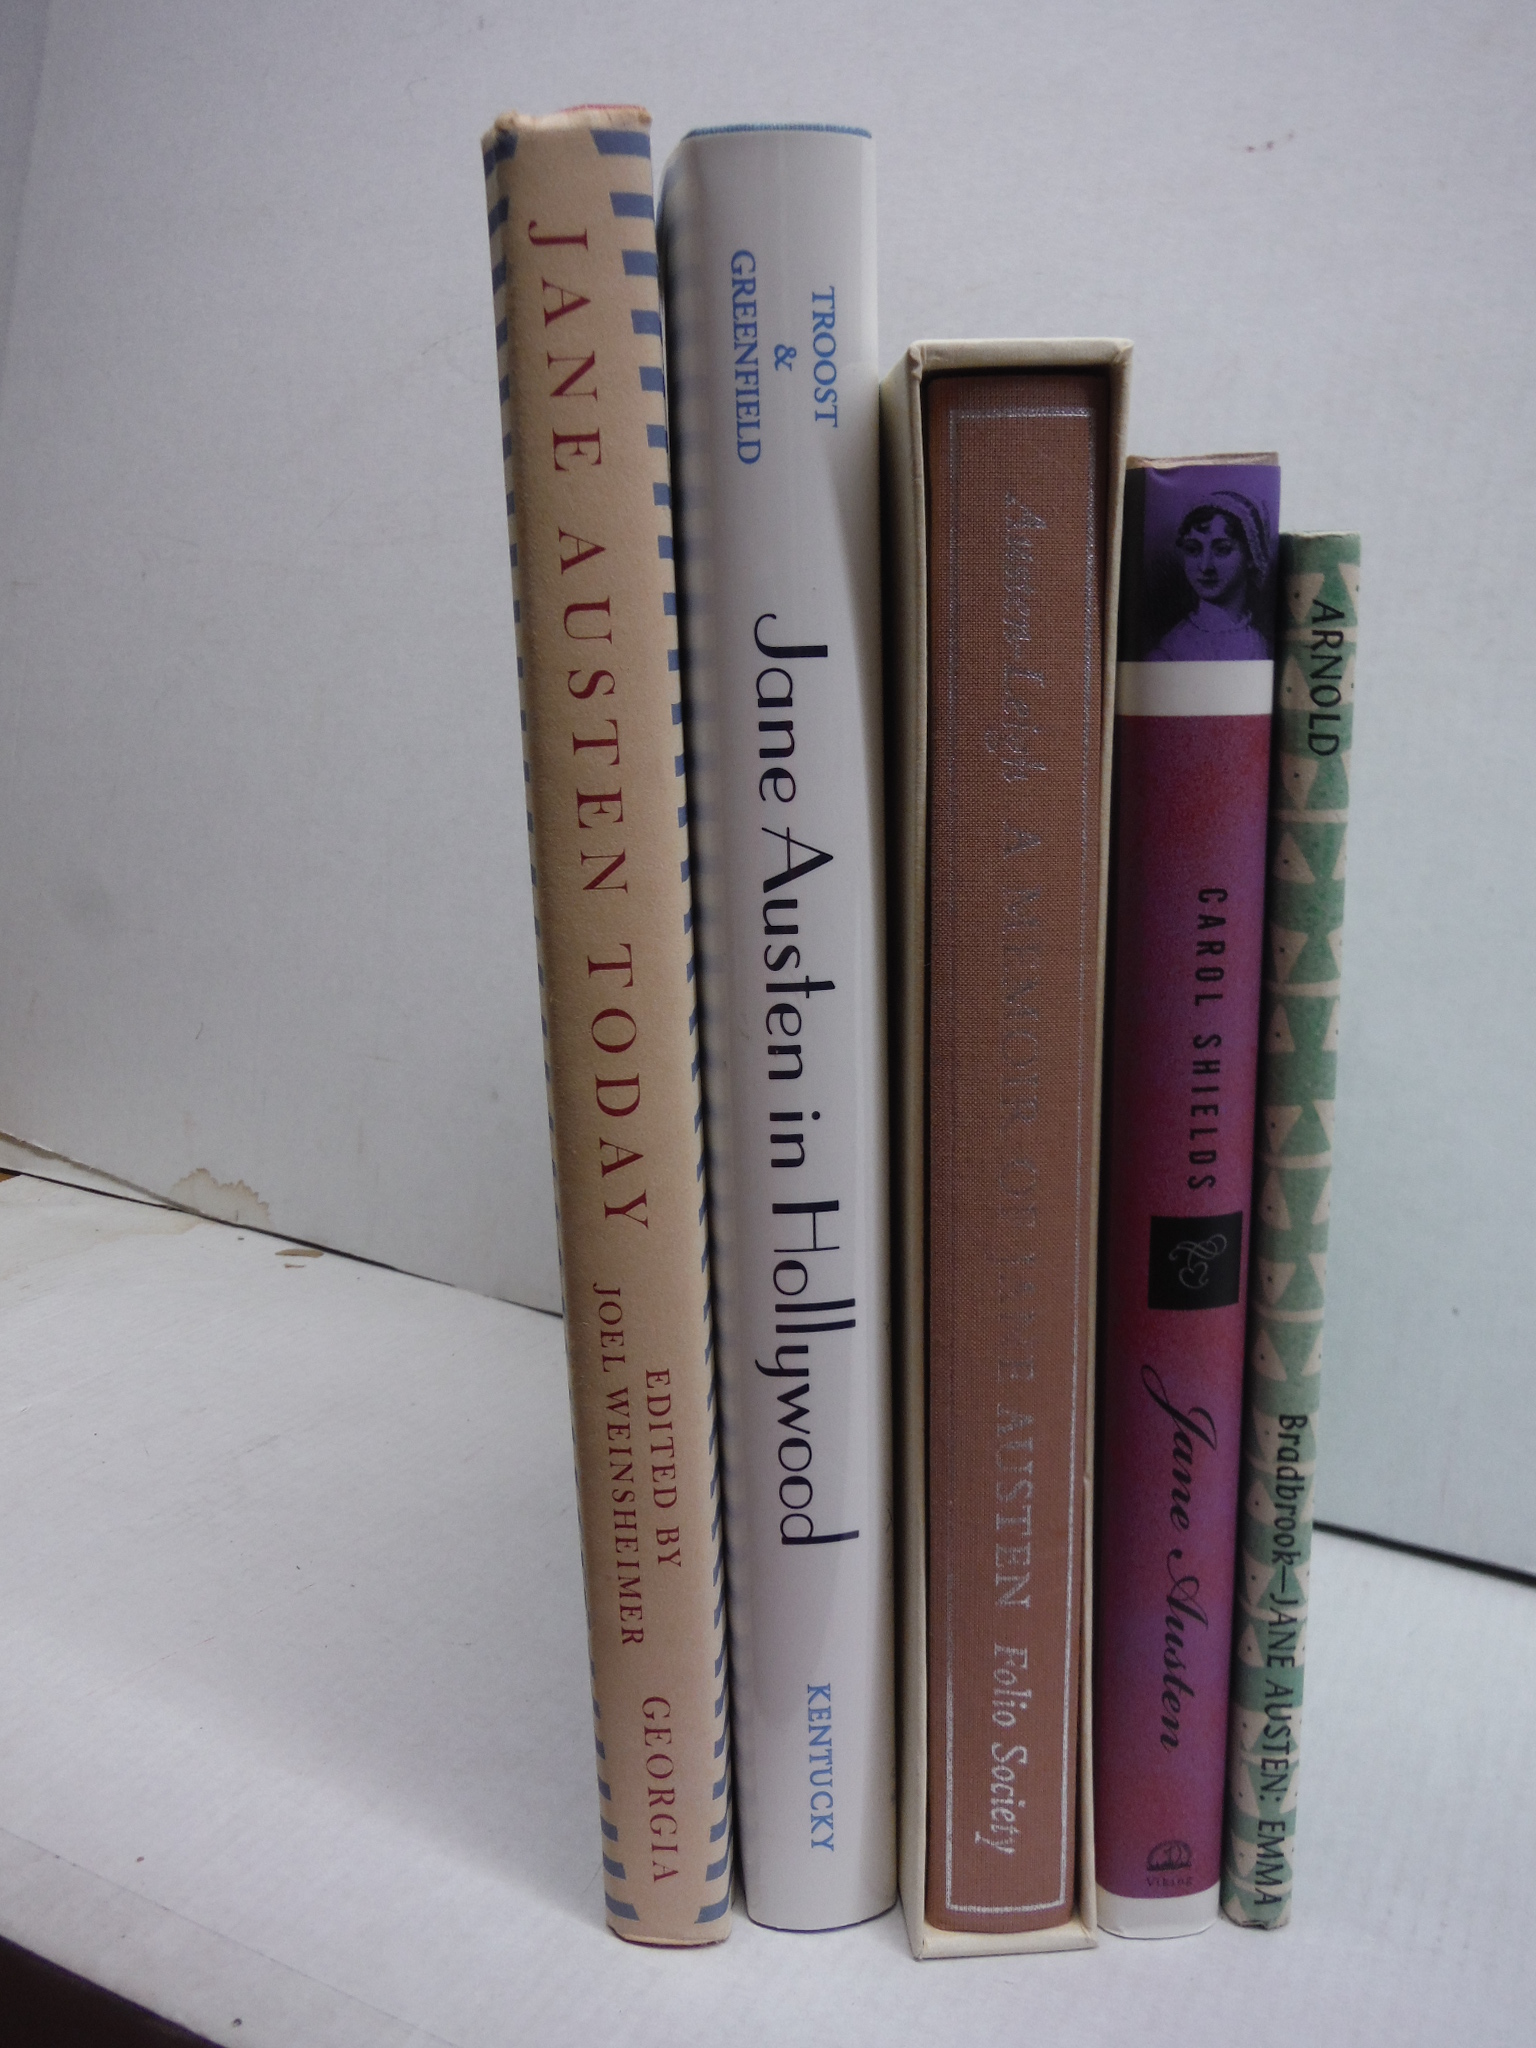 Lot of 5 Hardcovers relating to Jane Austen